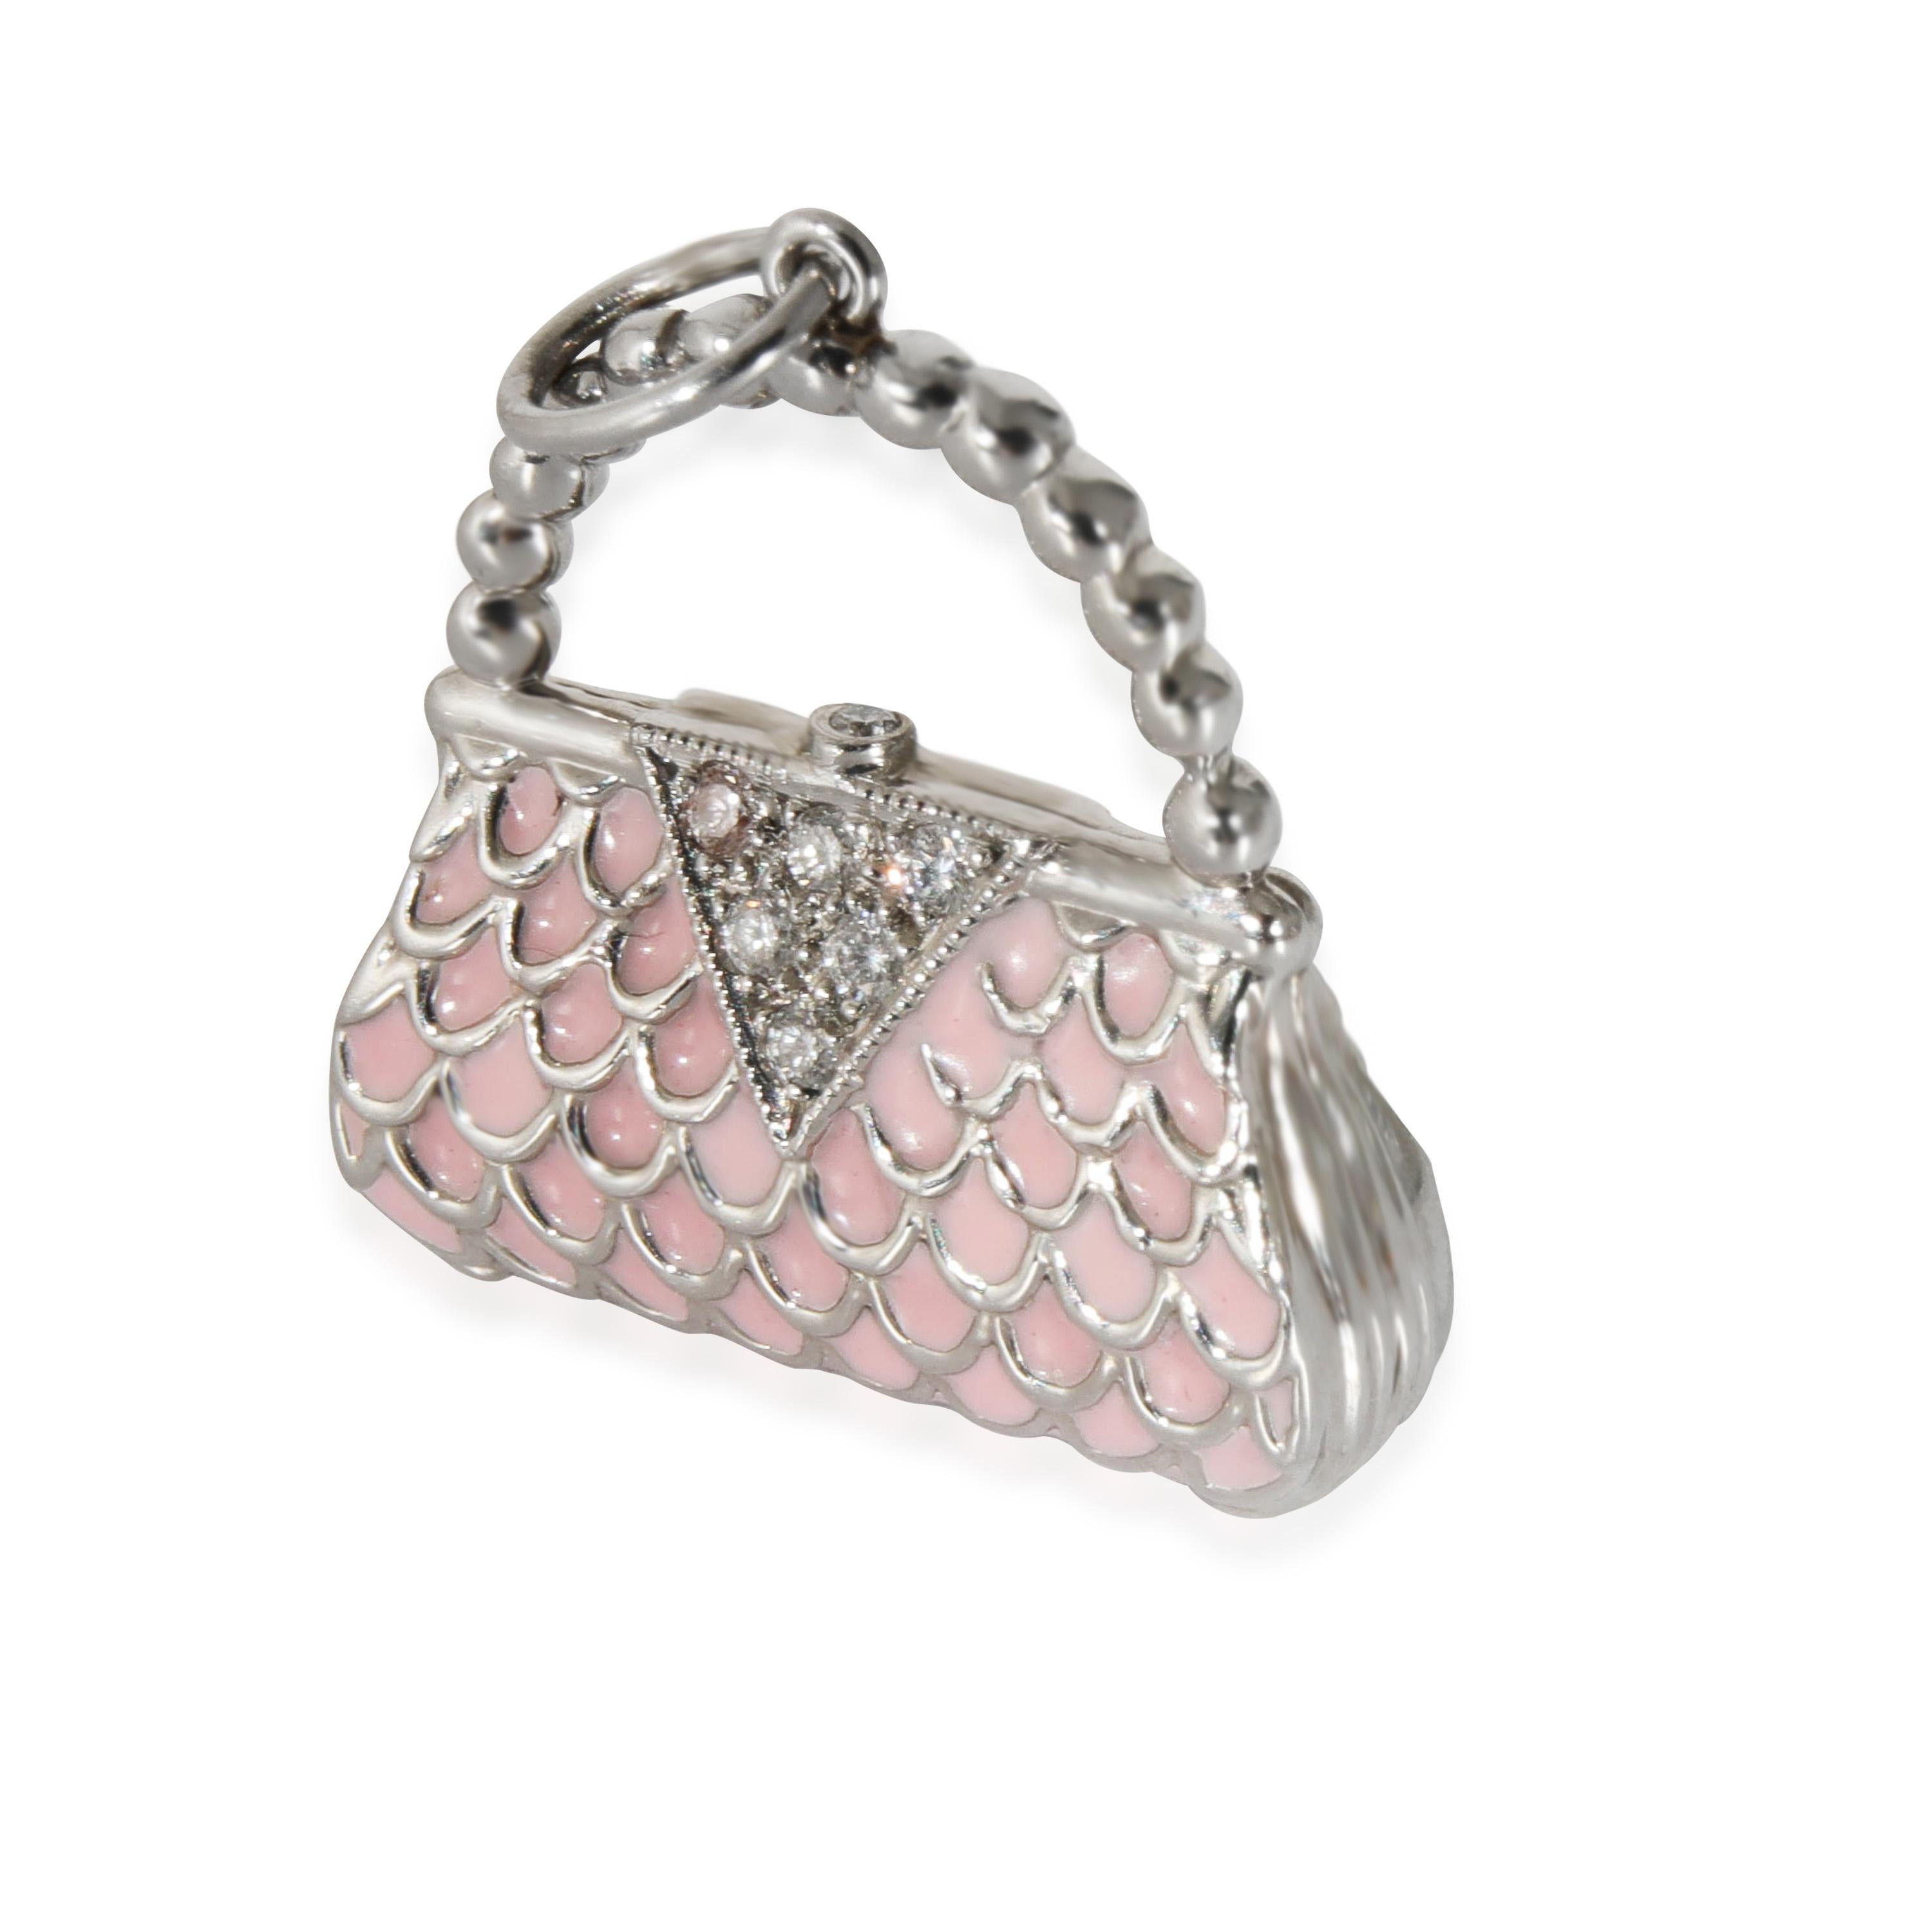 Tiffany & Co. Diamond & Enamel Handbag Charm in Platinum 0.04 CTW

PRIMARY DETAILS
SKU: 131985
Listing Title: Tiffany & Co. Diamond & Enamel Handbag Charm in Platinum 0.04 CTW
Condition Description: Retails for 2500 USD. In excellent condition. 15